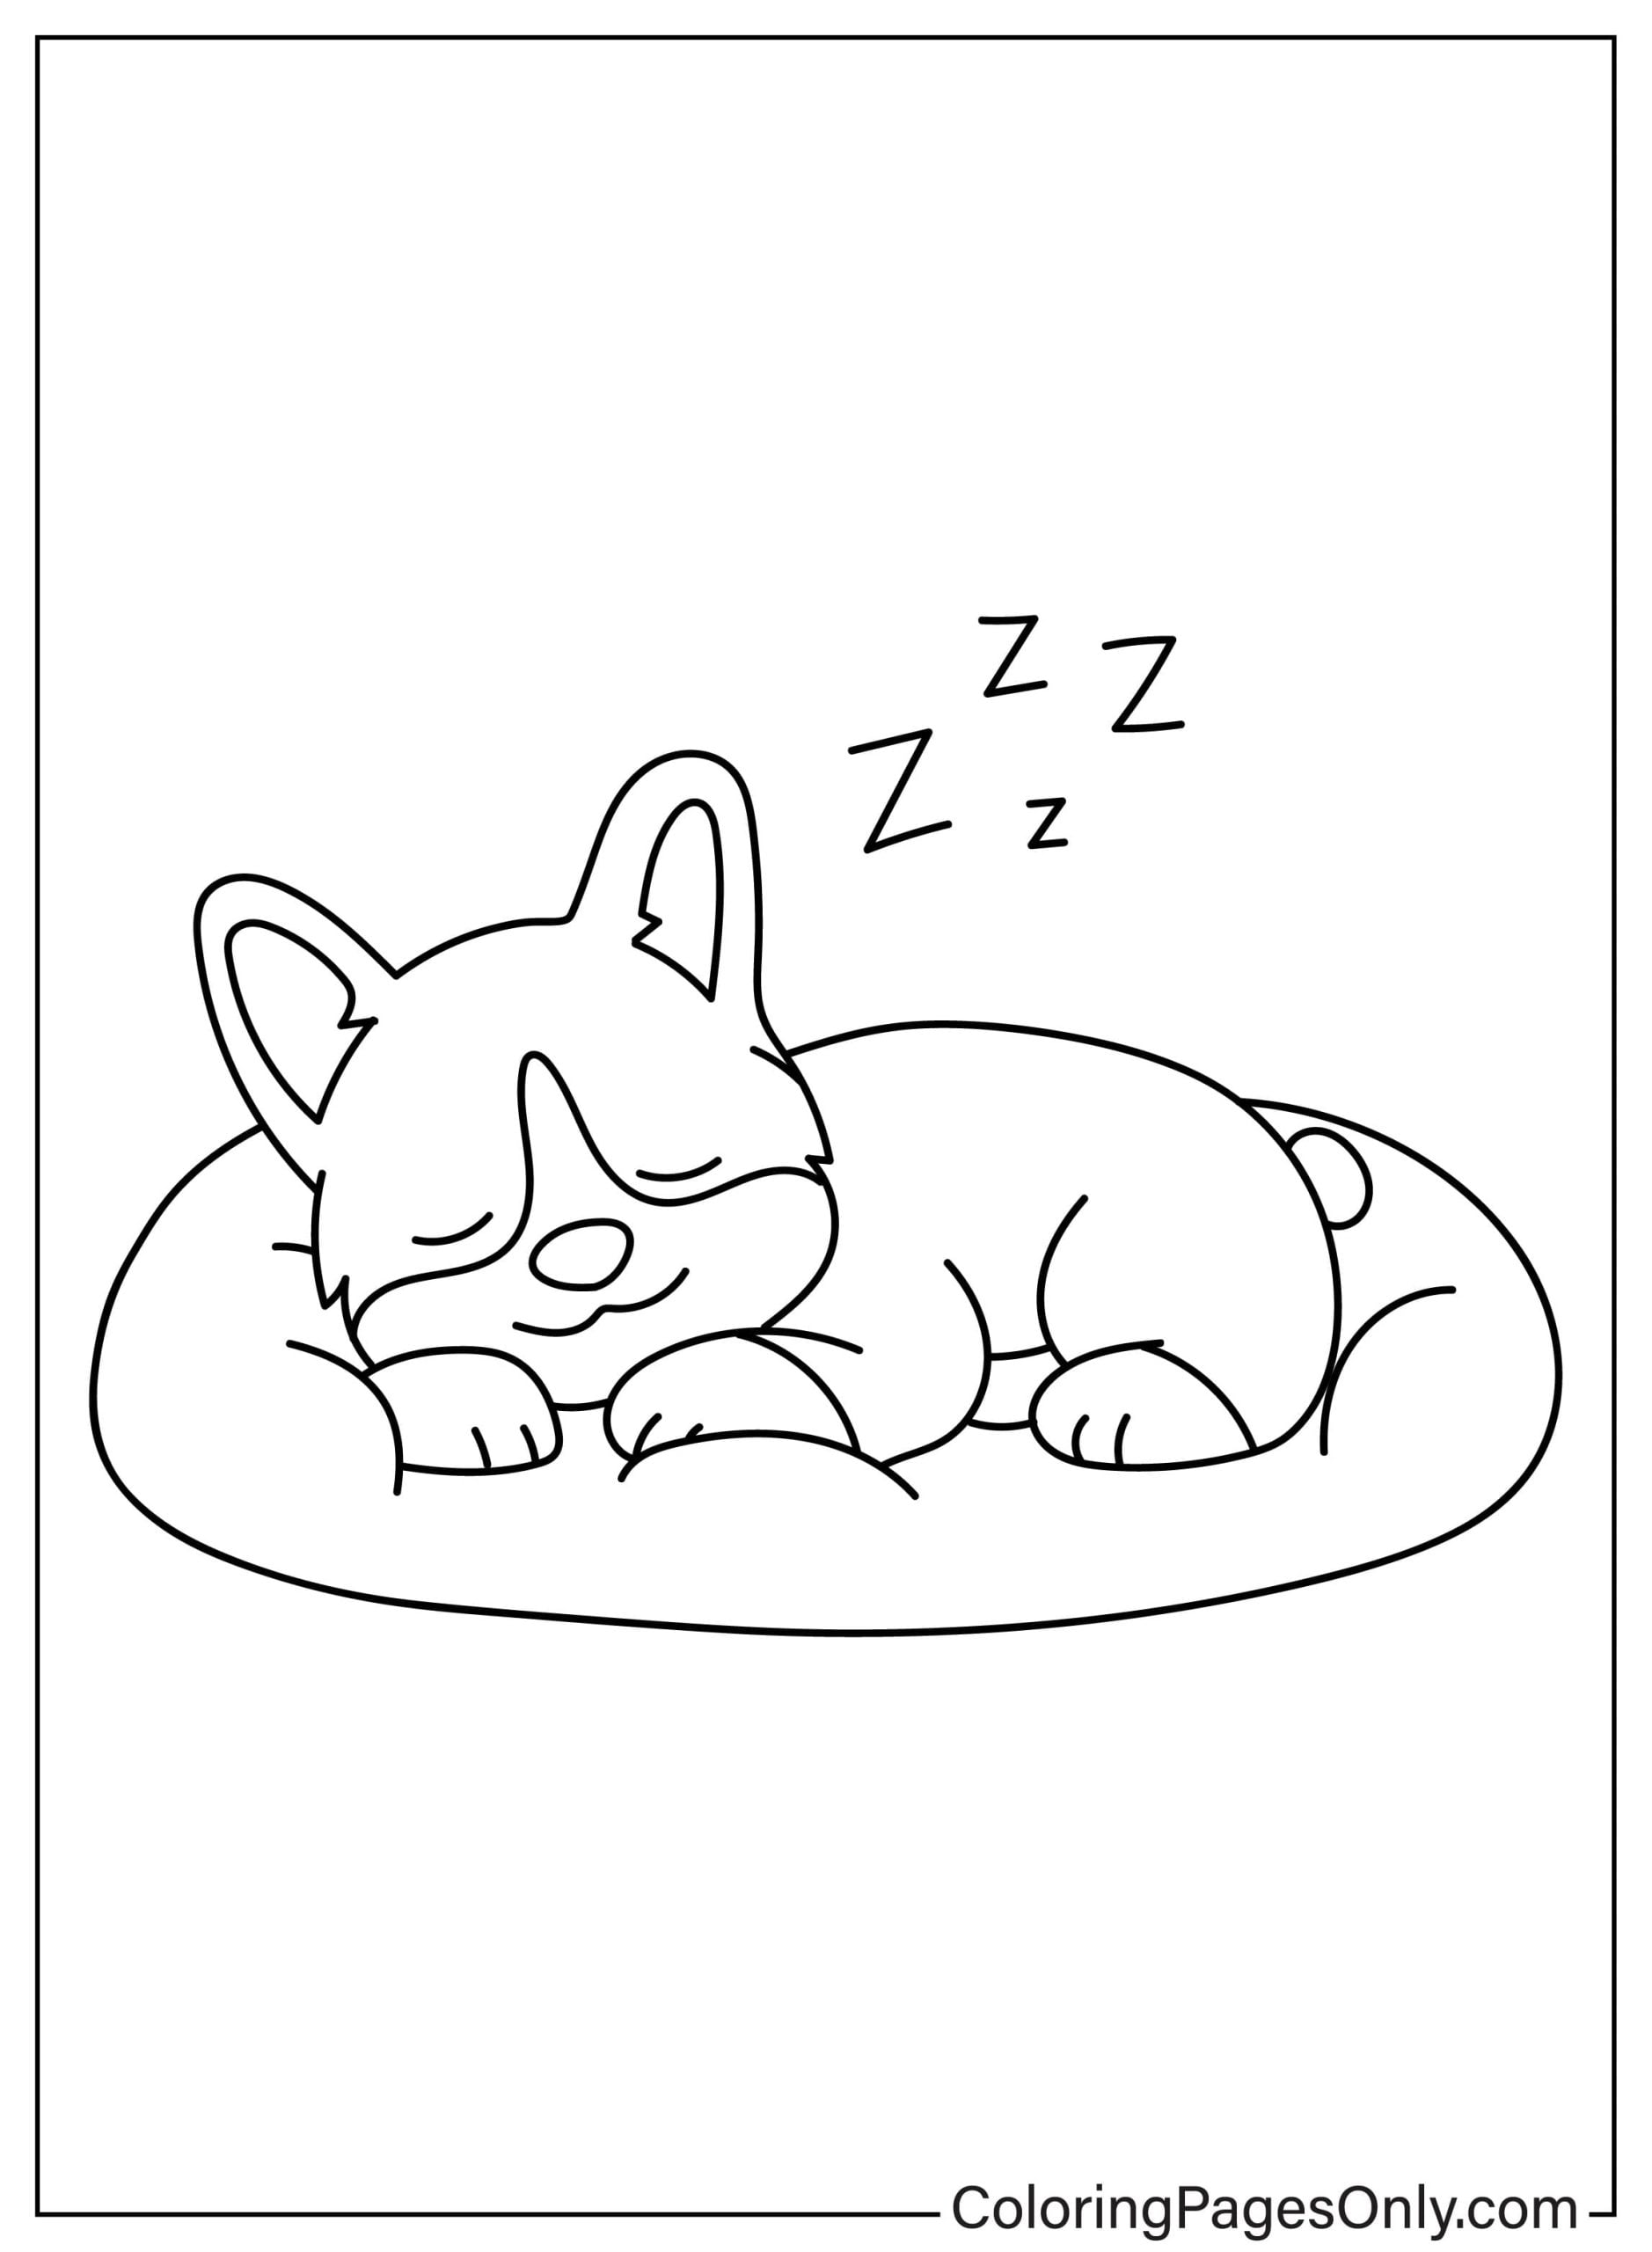 Corgi Dog Sleeping On Pillow from Corgi